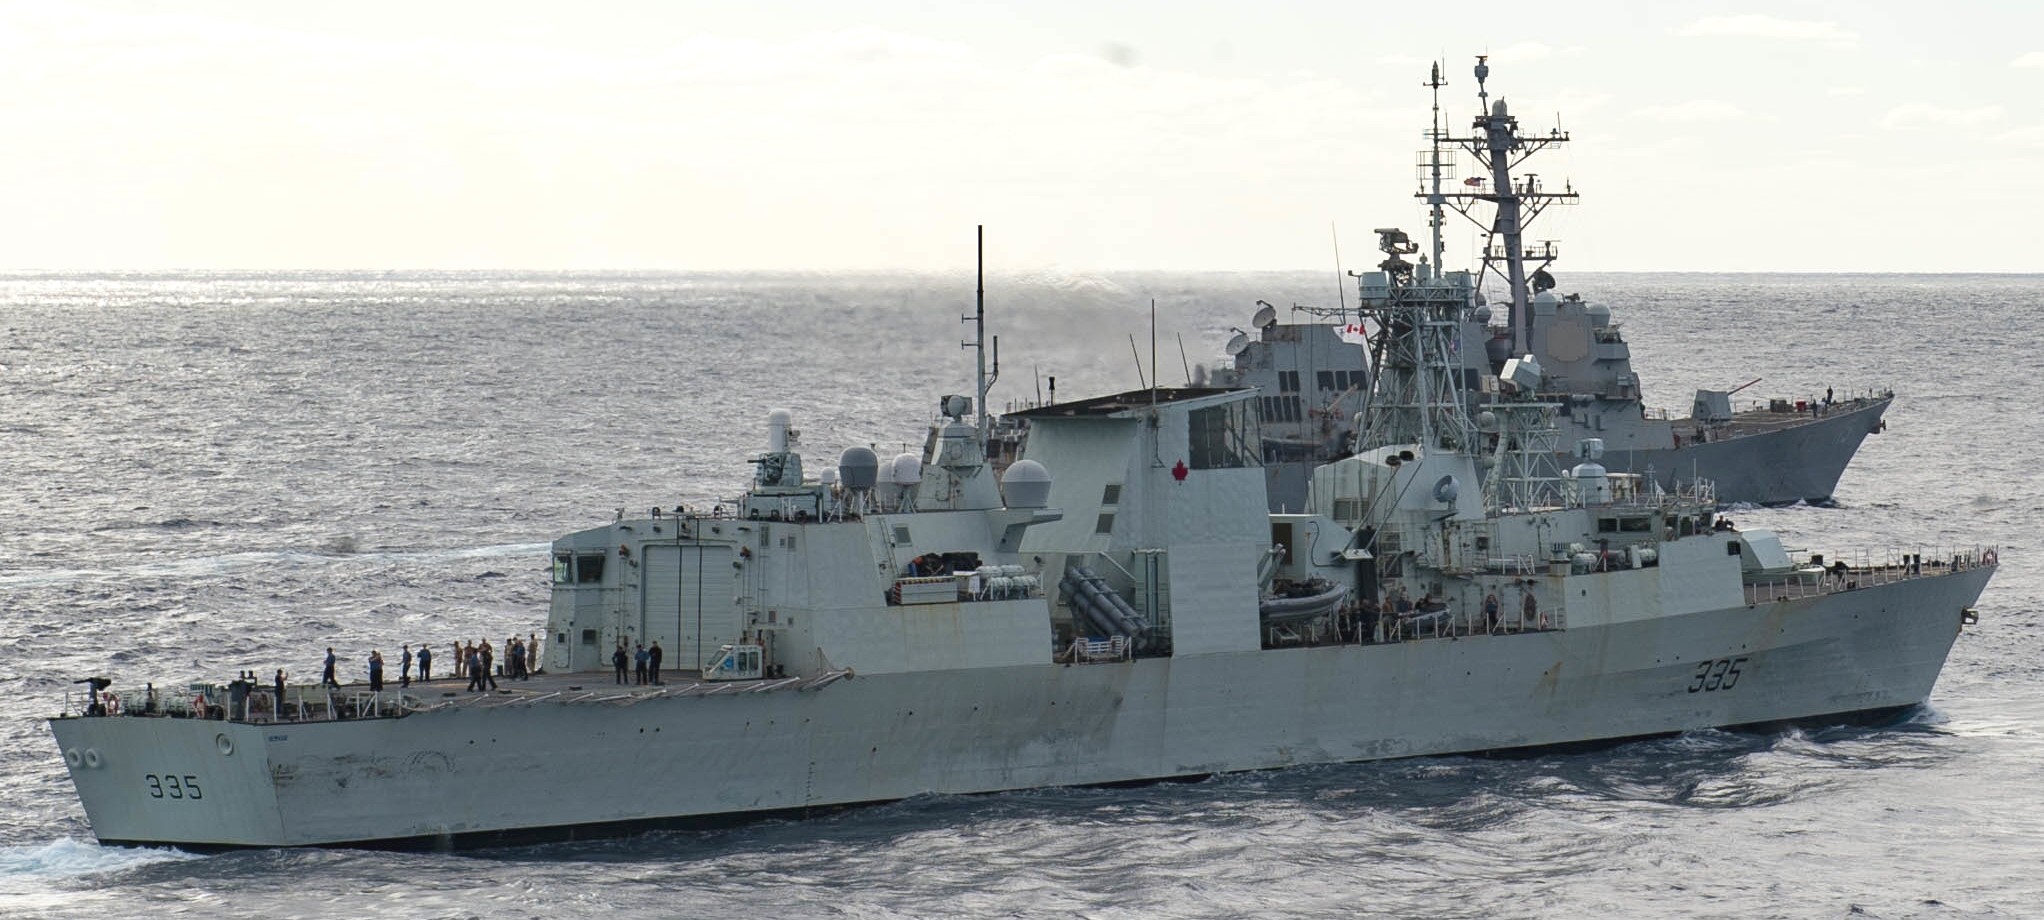 ffh-335 hmcs calgary halifax class helicopter patrol frigate ncsm royal canadian navy 29